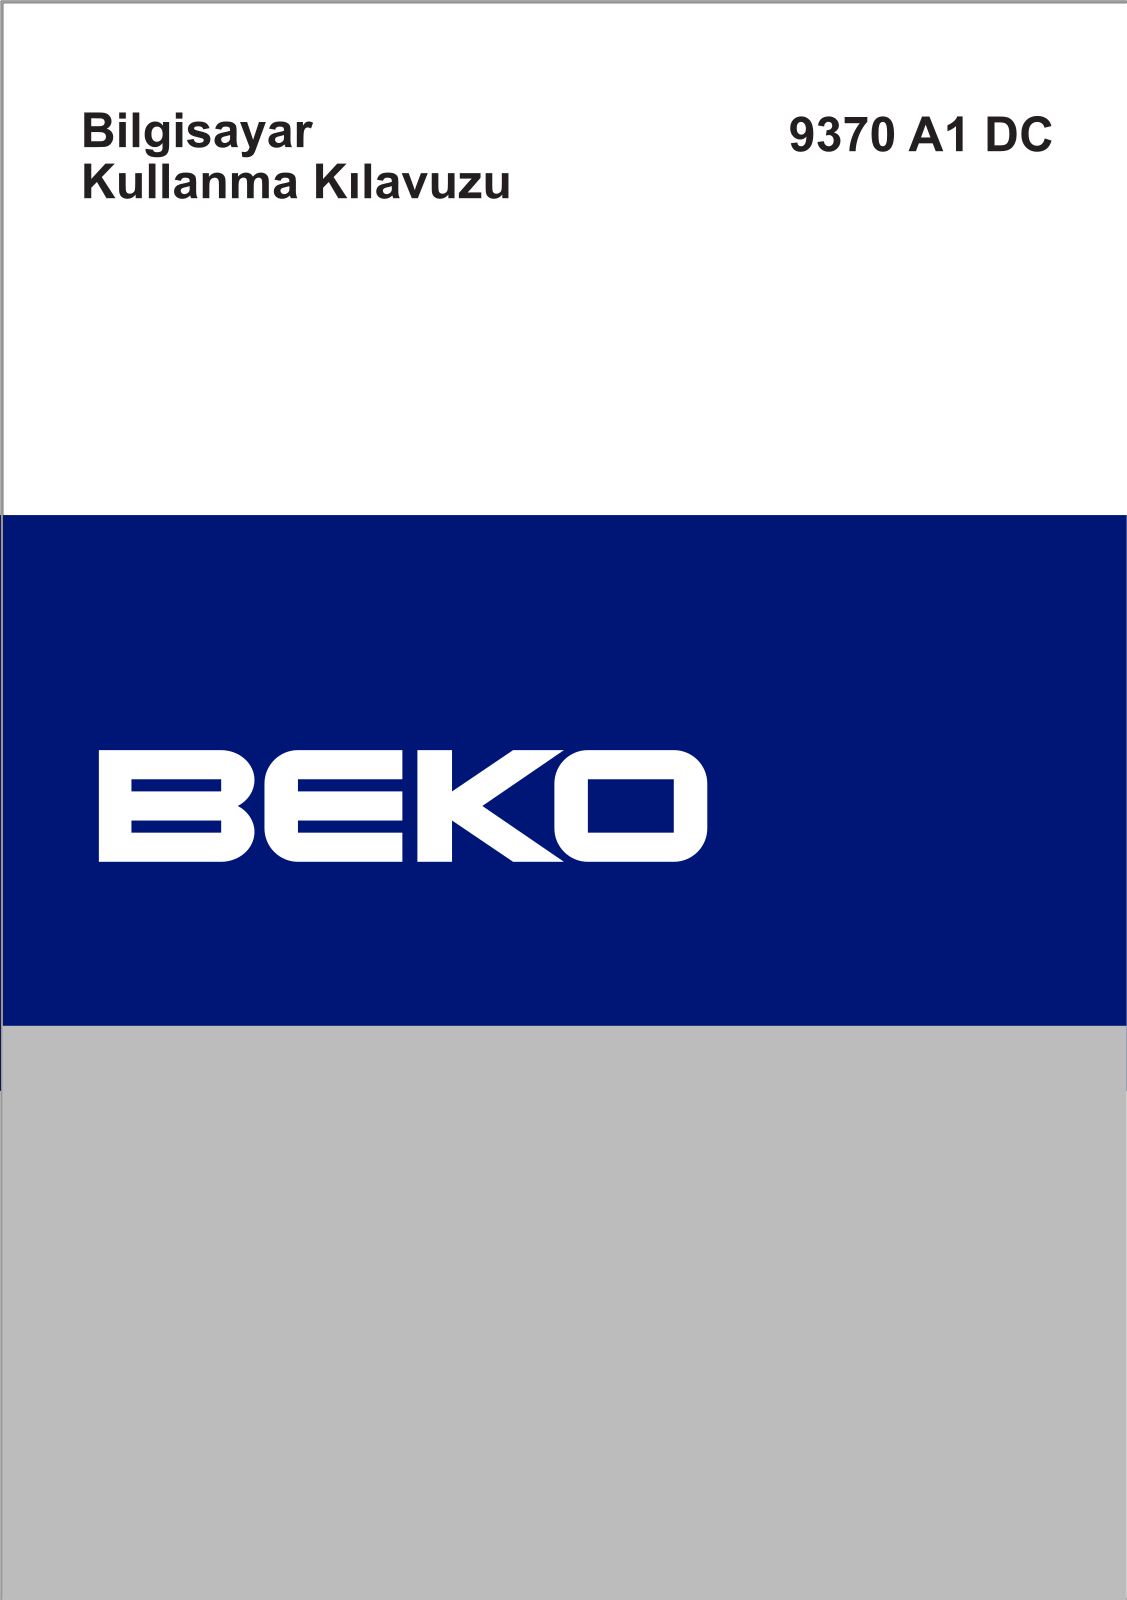 Beko 9370 A1 DC Manual